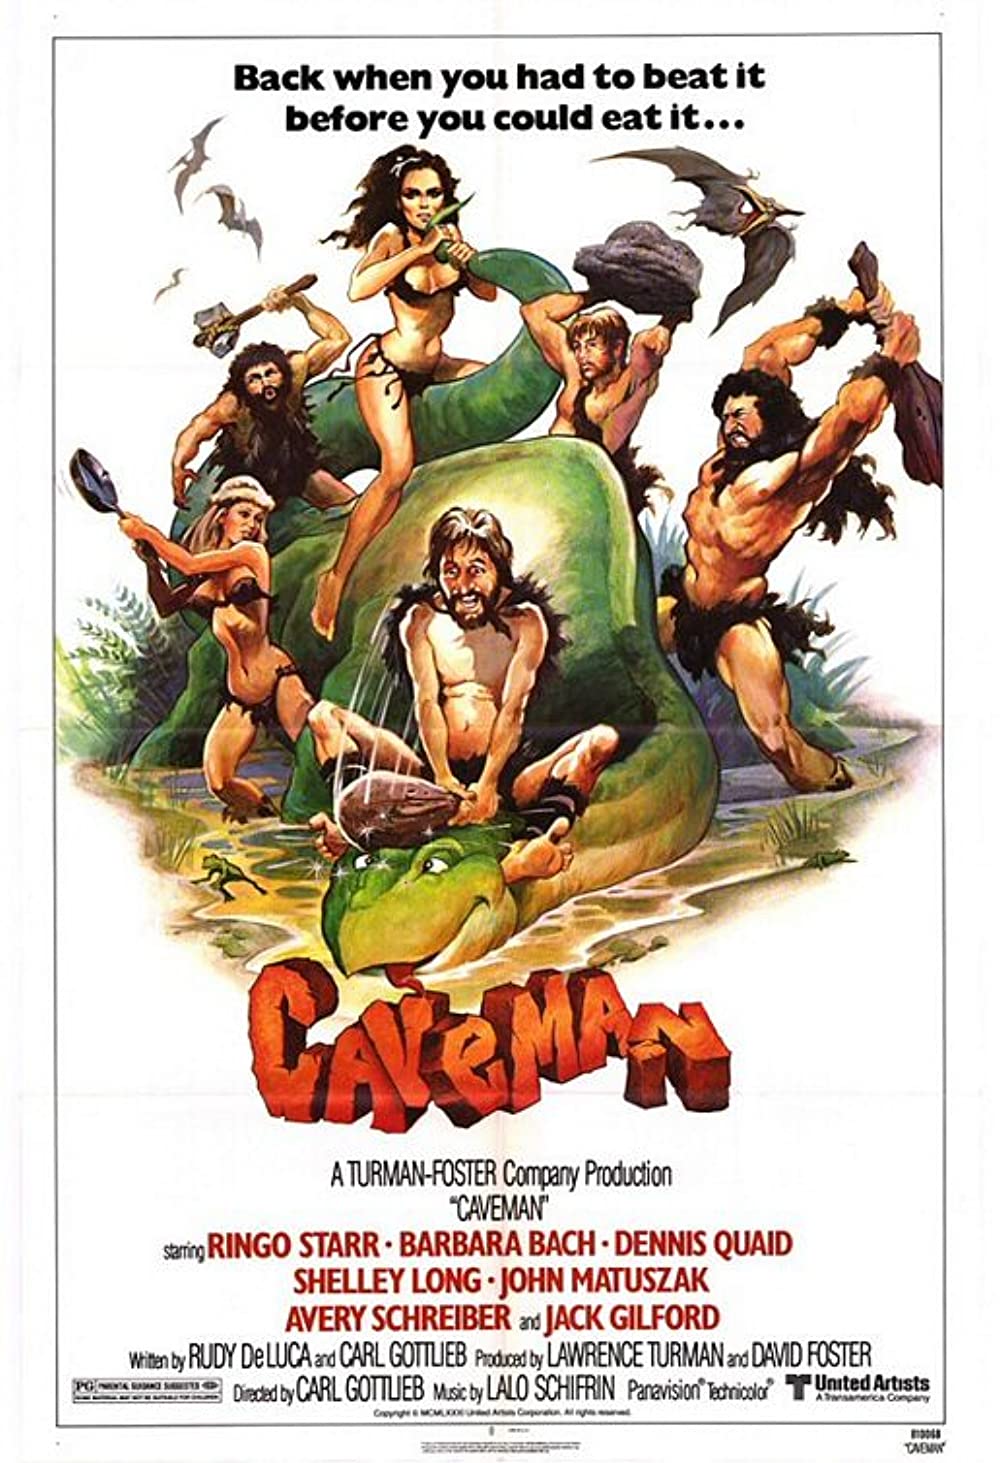 Filmbeschreibung zu Caveman